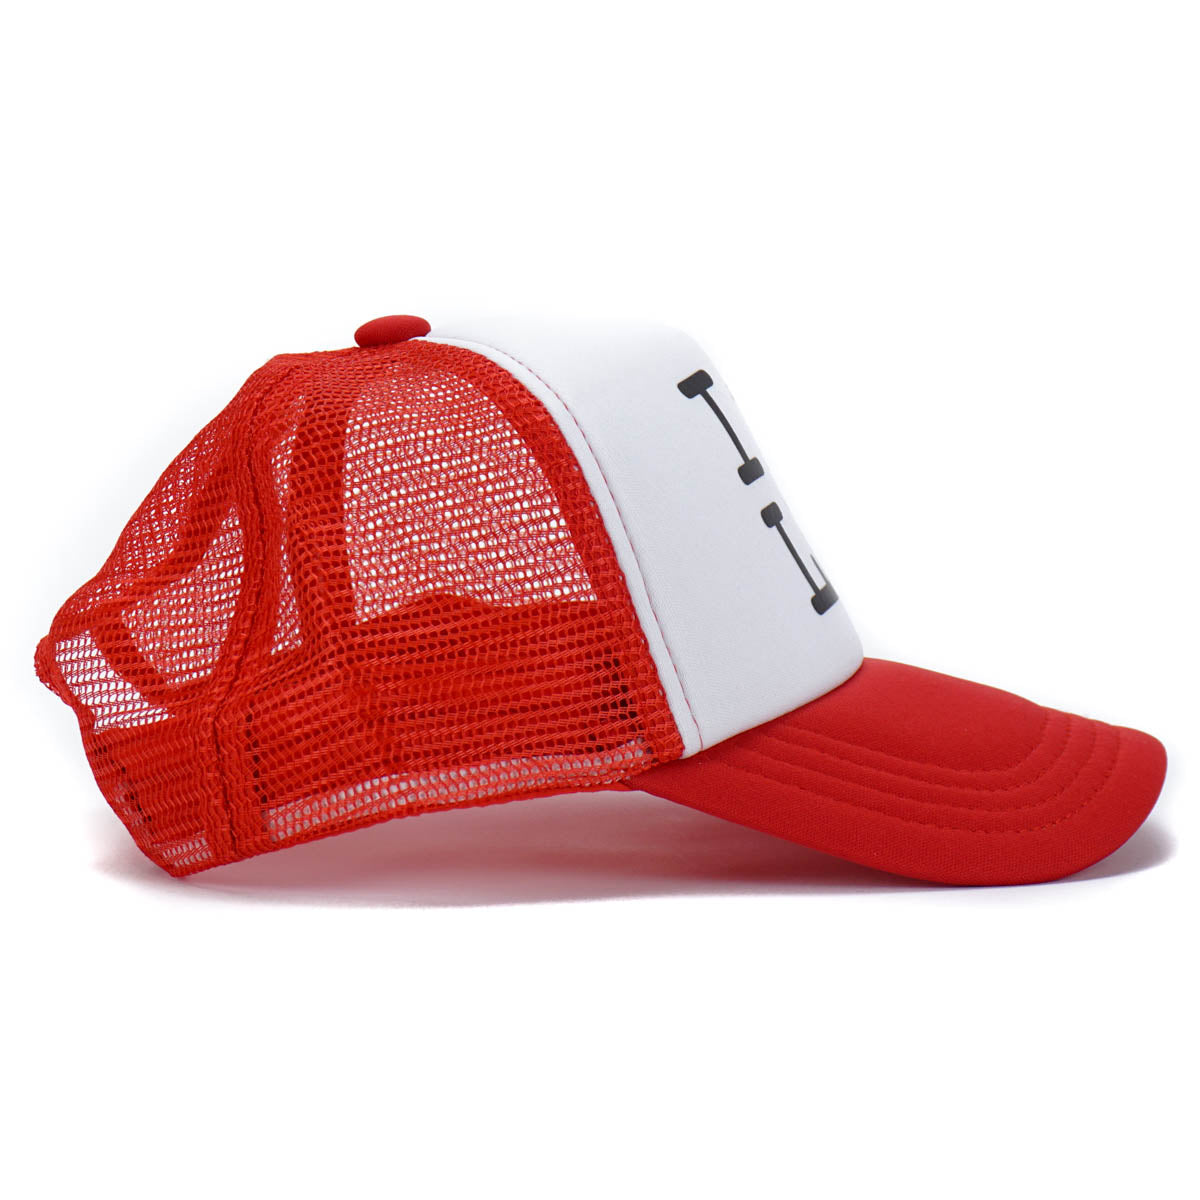 I SKATE LA Youth Hat - Red / White